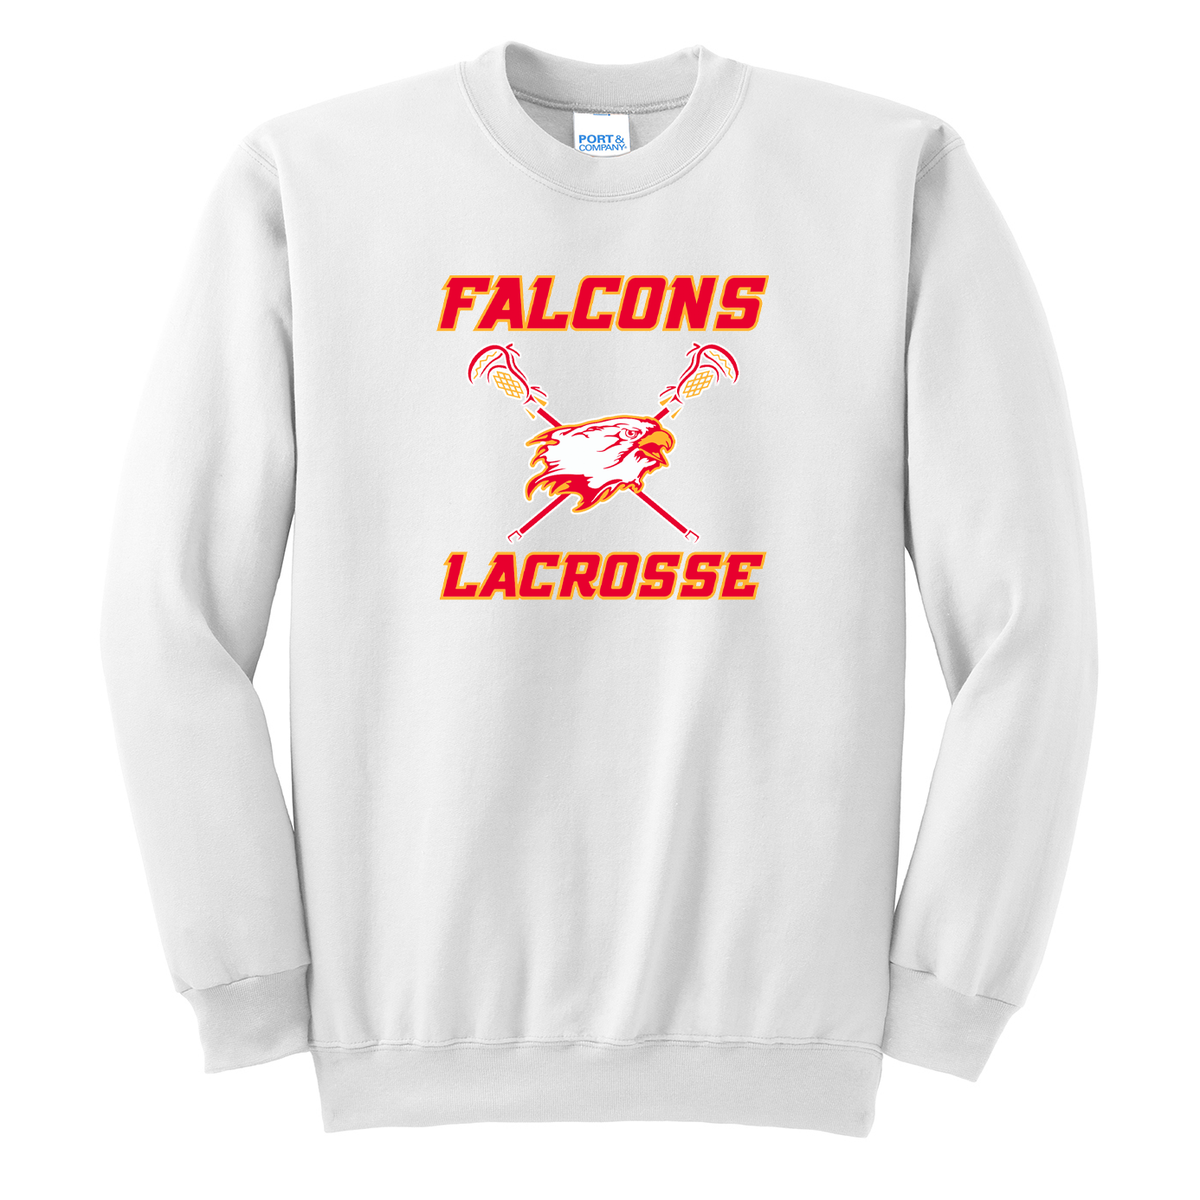 Falcons Lacrosse Club Crew Neck Sweater